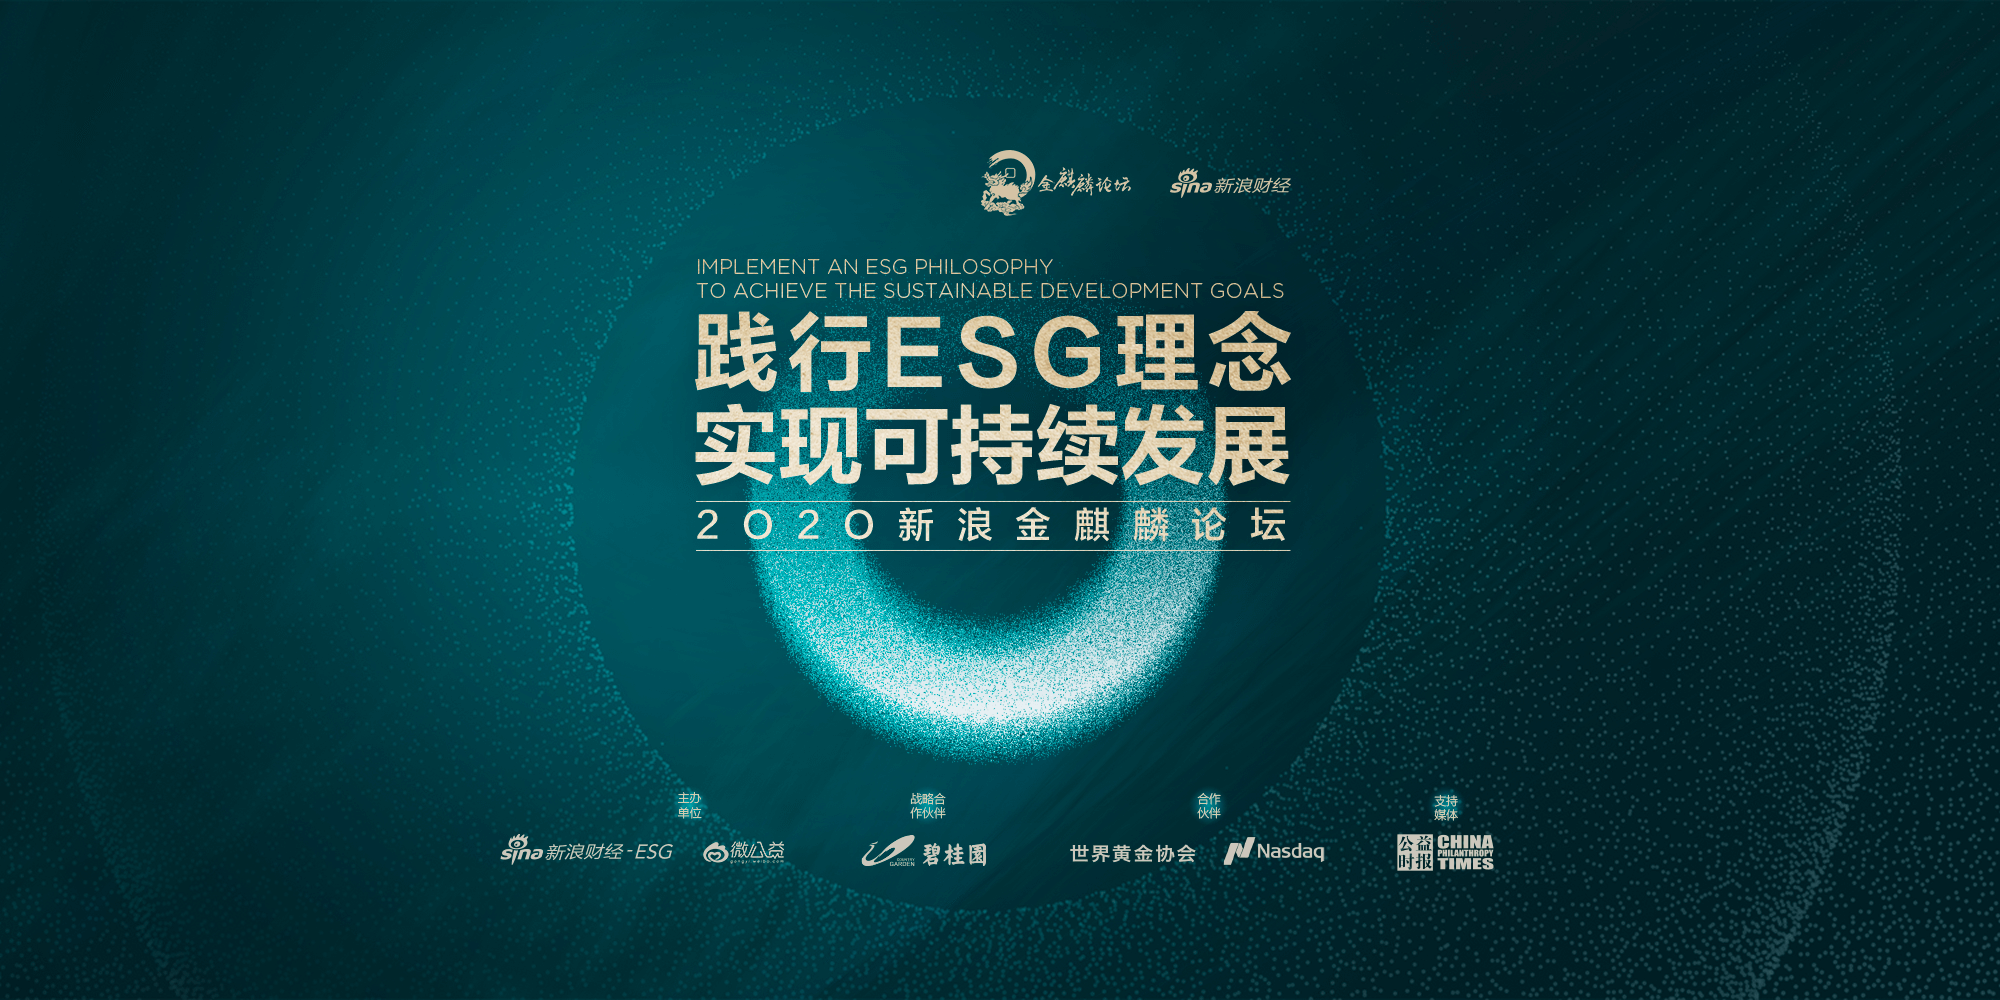 USI Won “Sustainable Development Award” and “Corporate Social Responsibility Award” in China ESG Golden Awards 2020